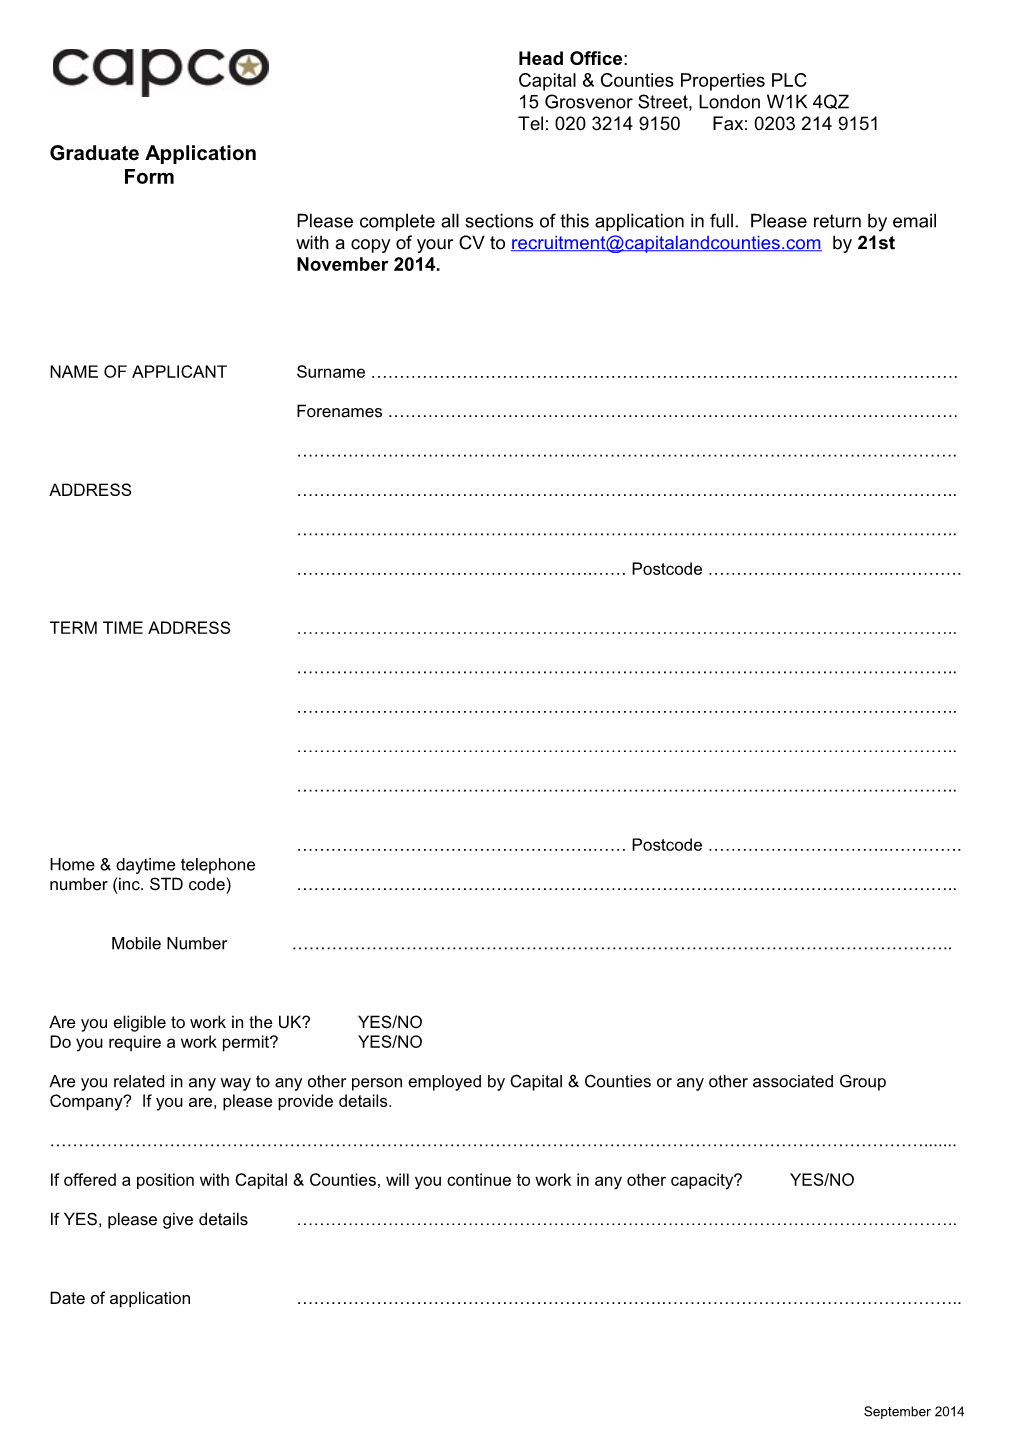 Graduate Application Form